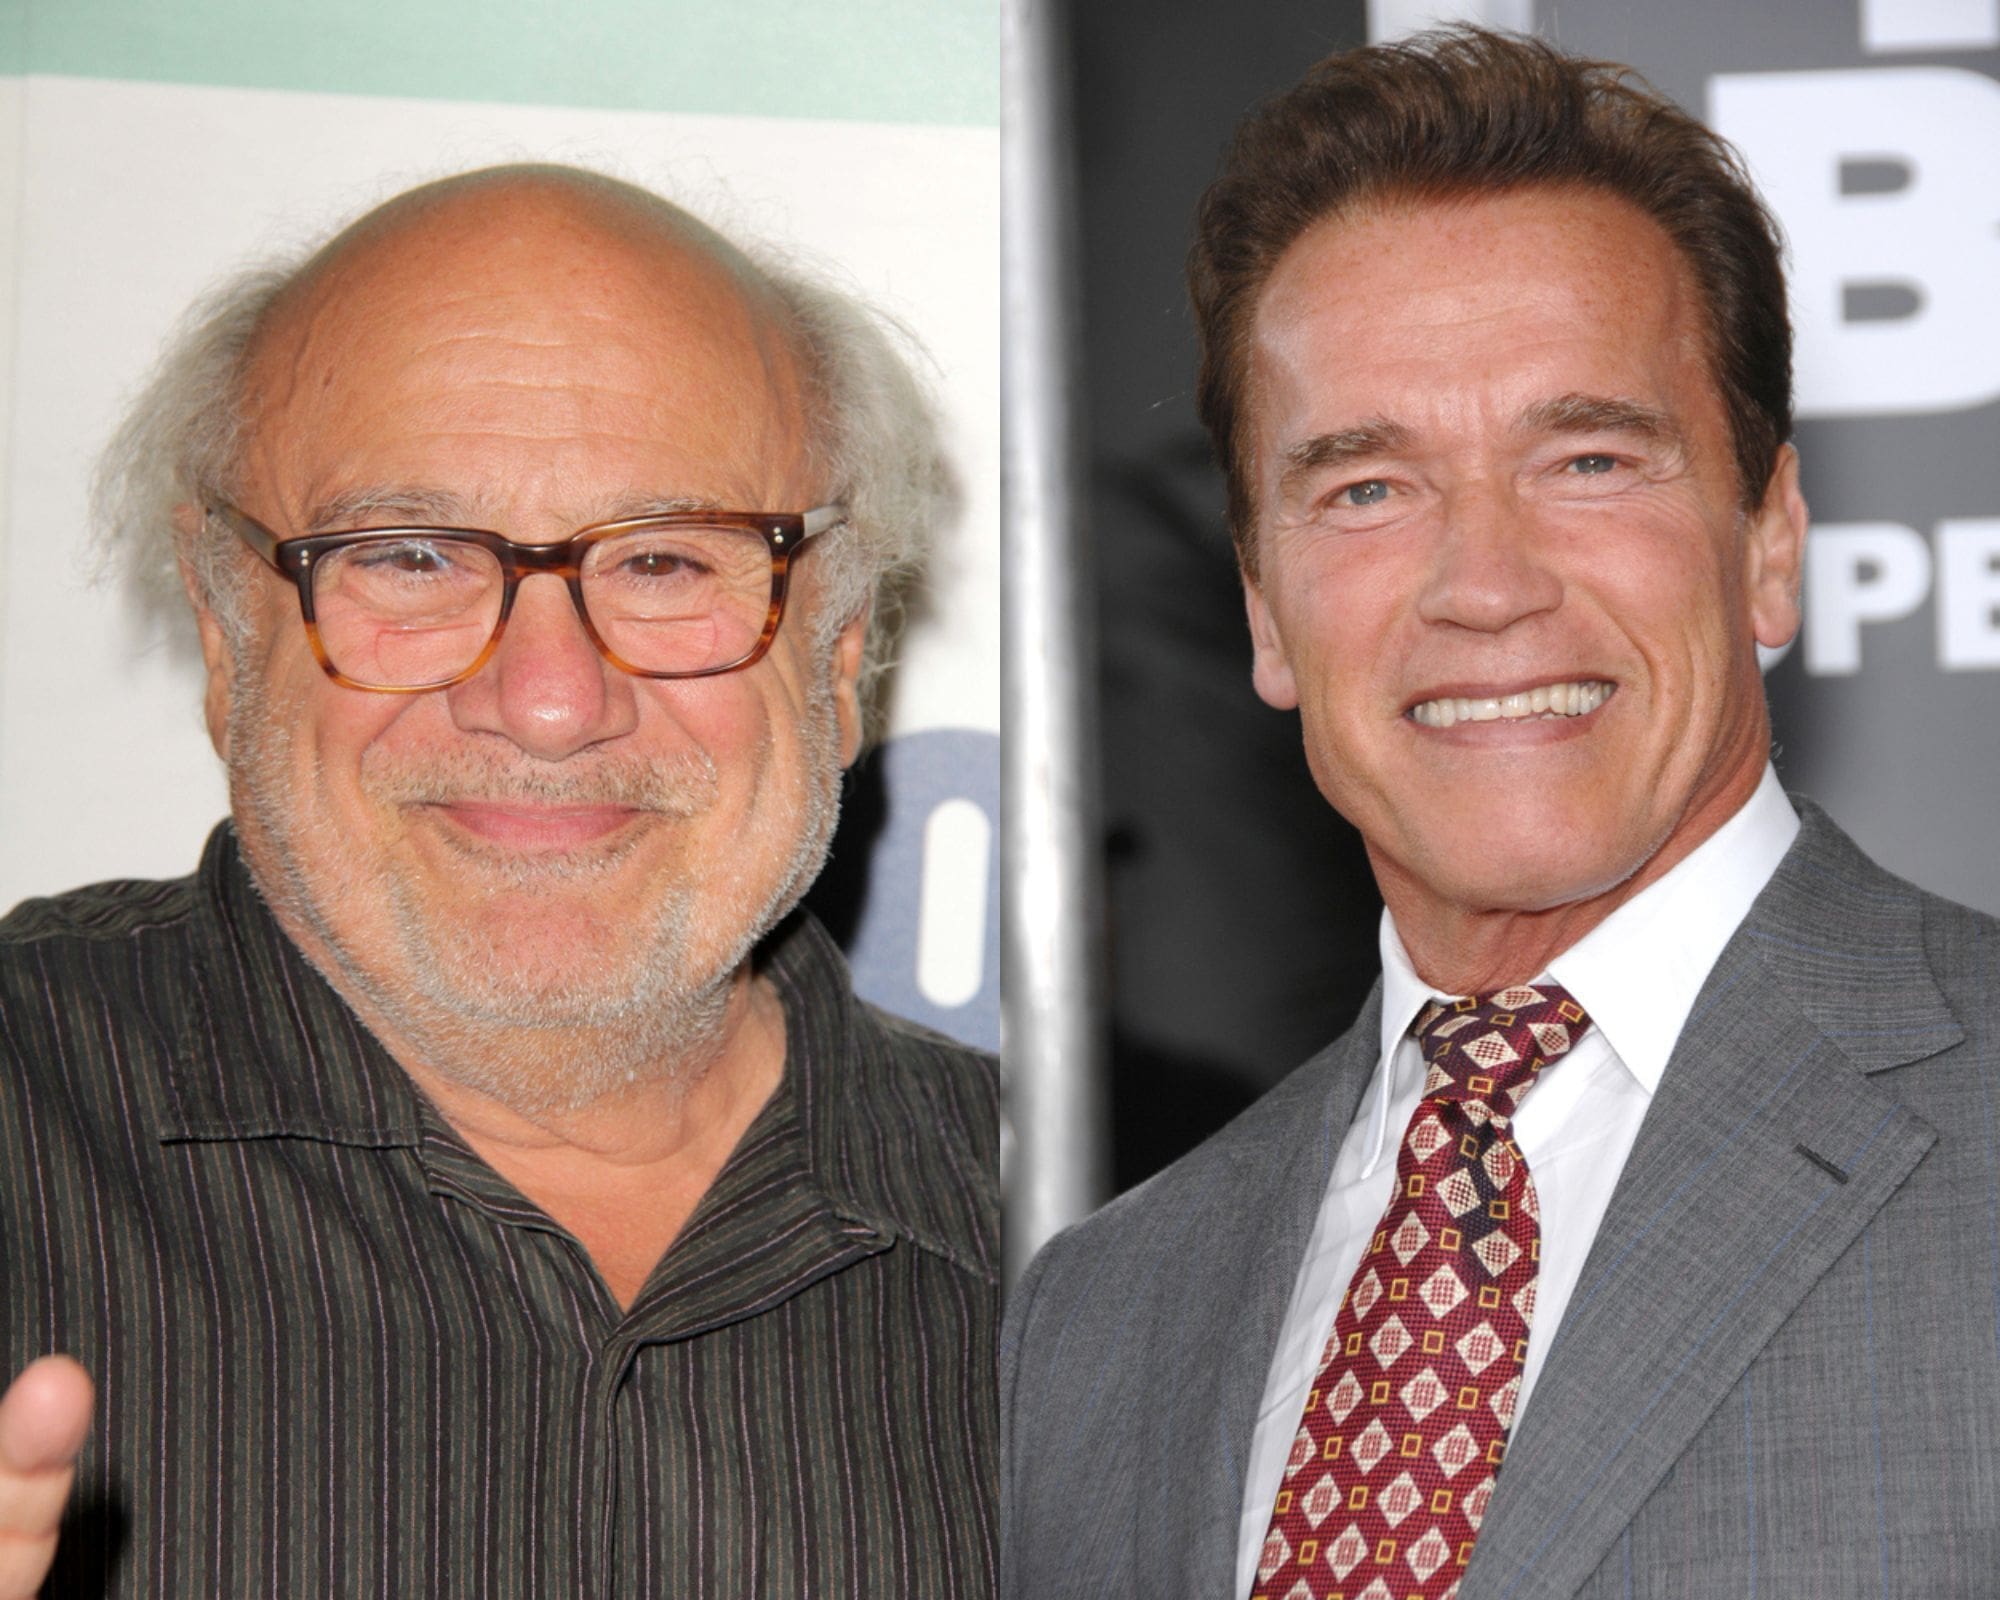 Danny Devito Announces New Movie In Works With Arnold Schwarzenegger